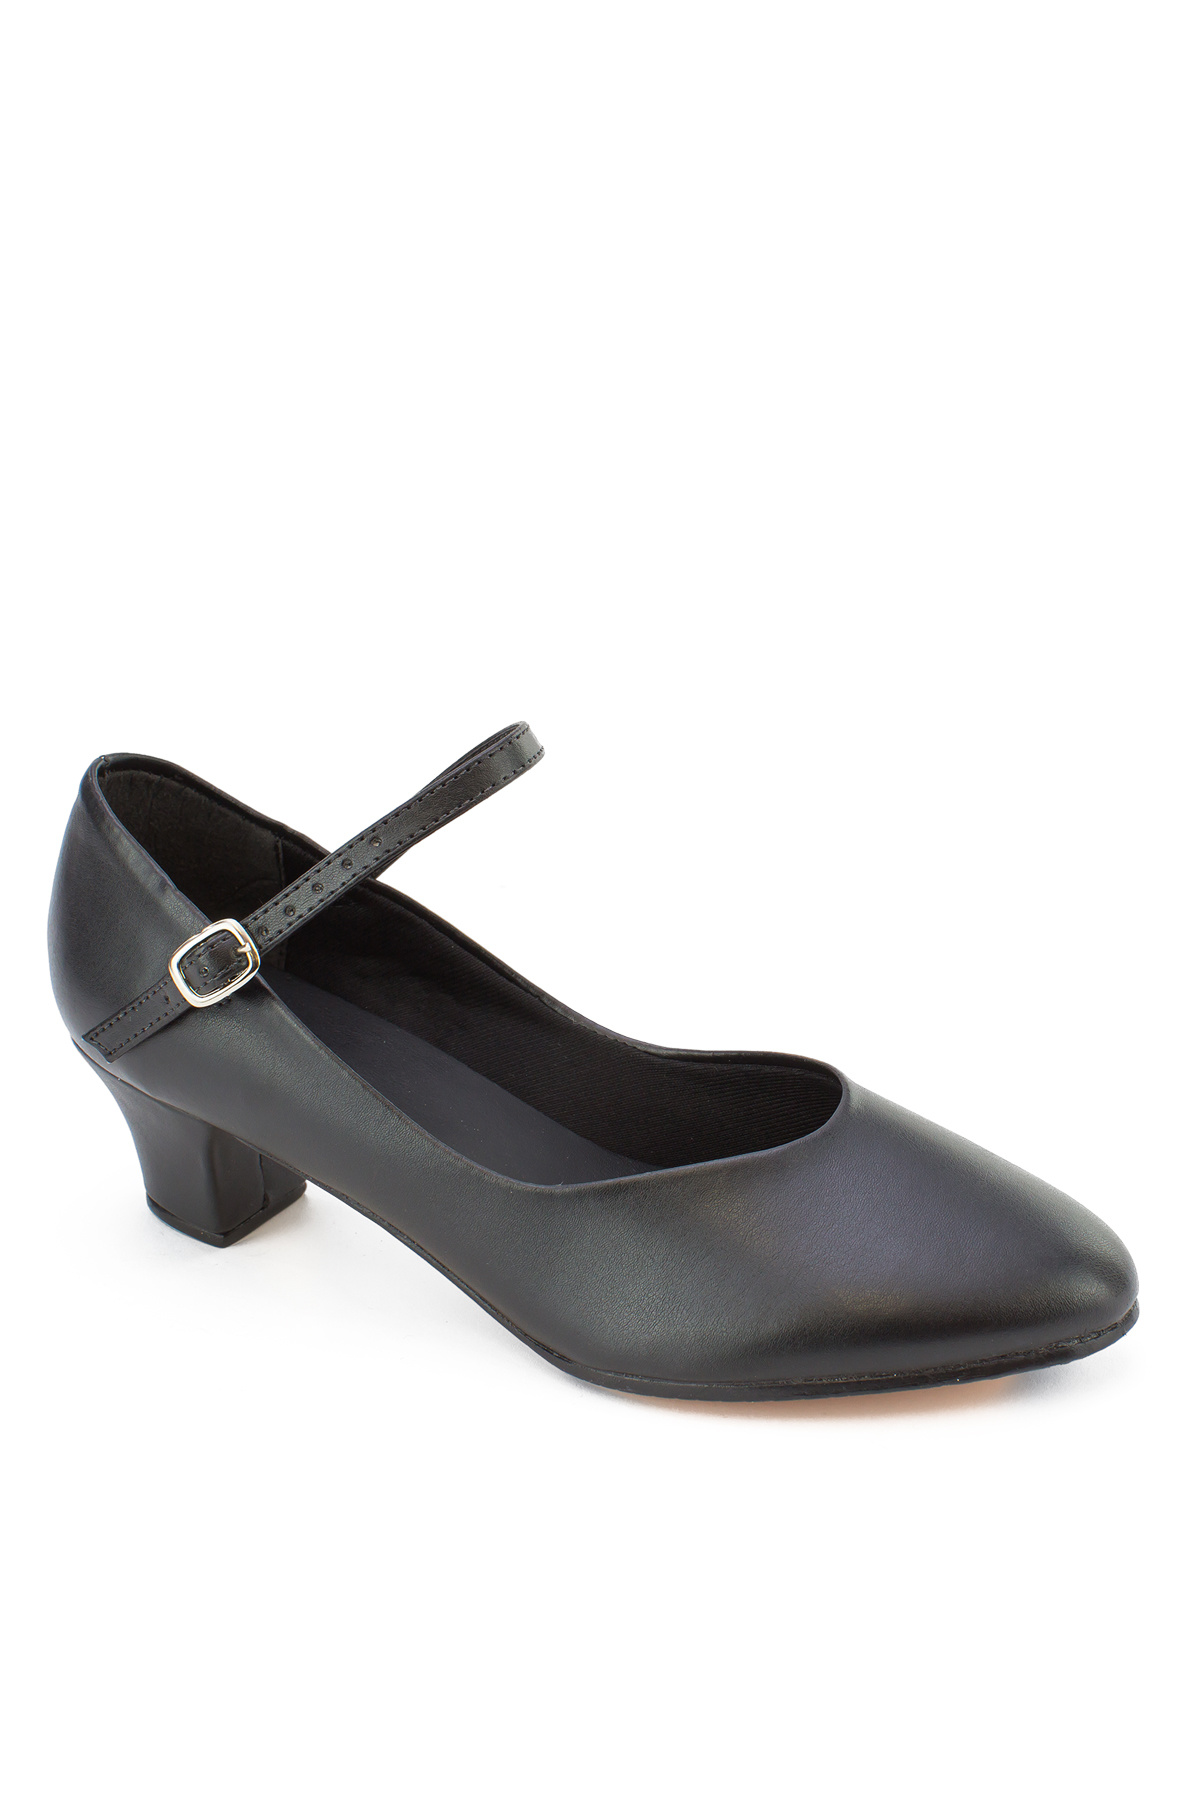 So Danca Character shoe  So Danca CH-50, talon 1.5 po.,  1.5 heel, Synthetic upper, Leather sole